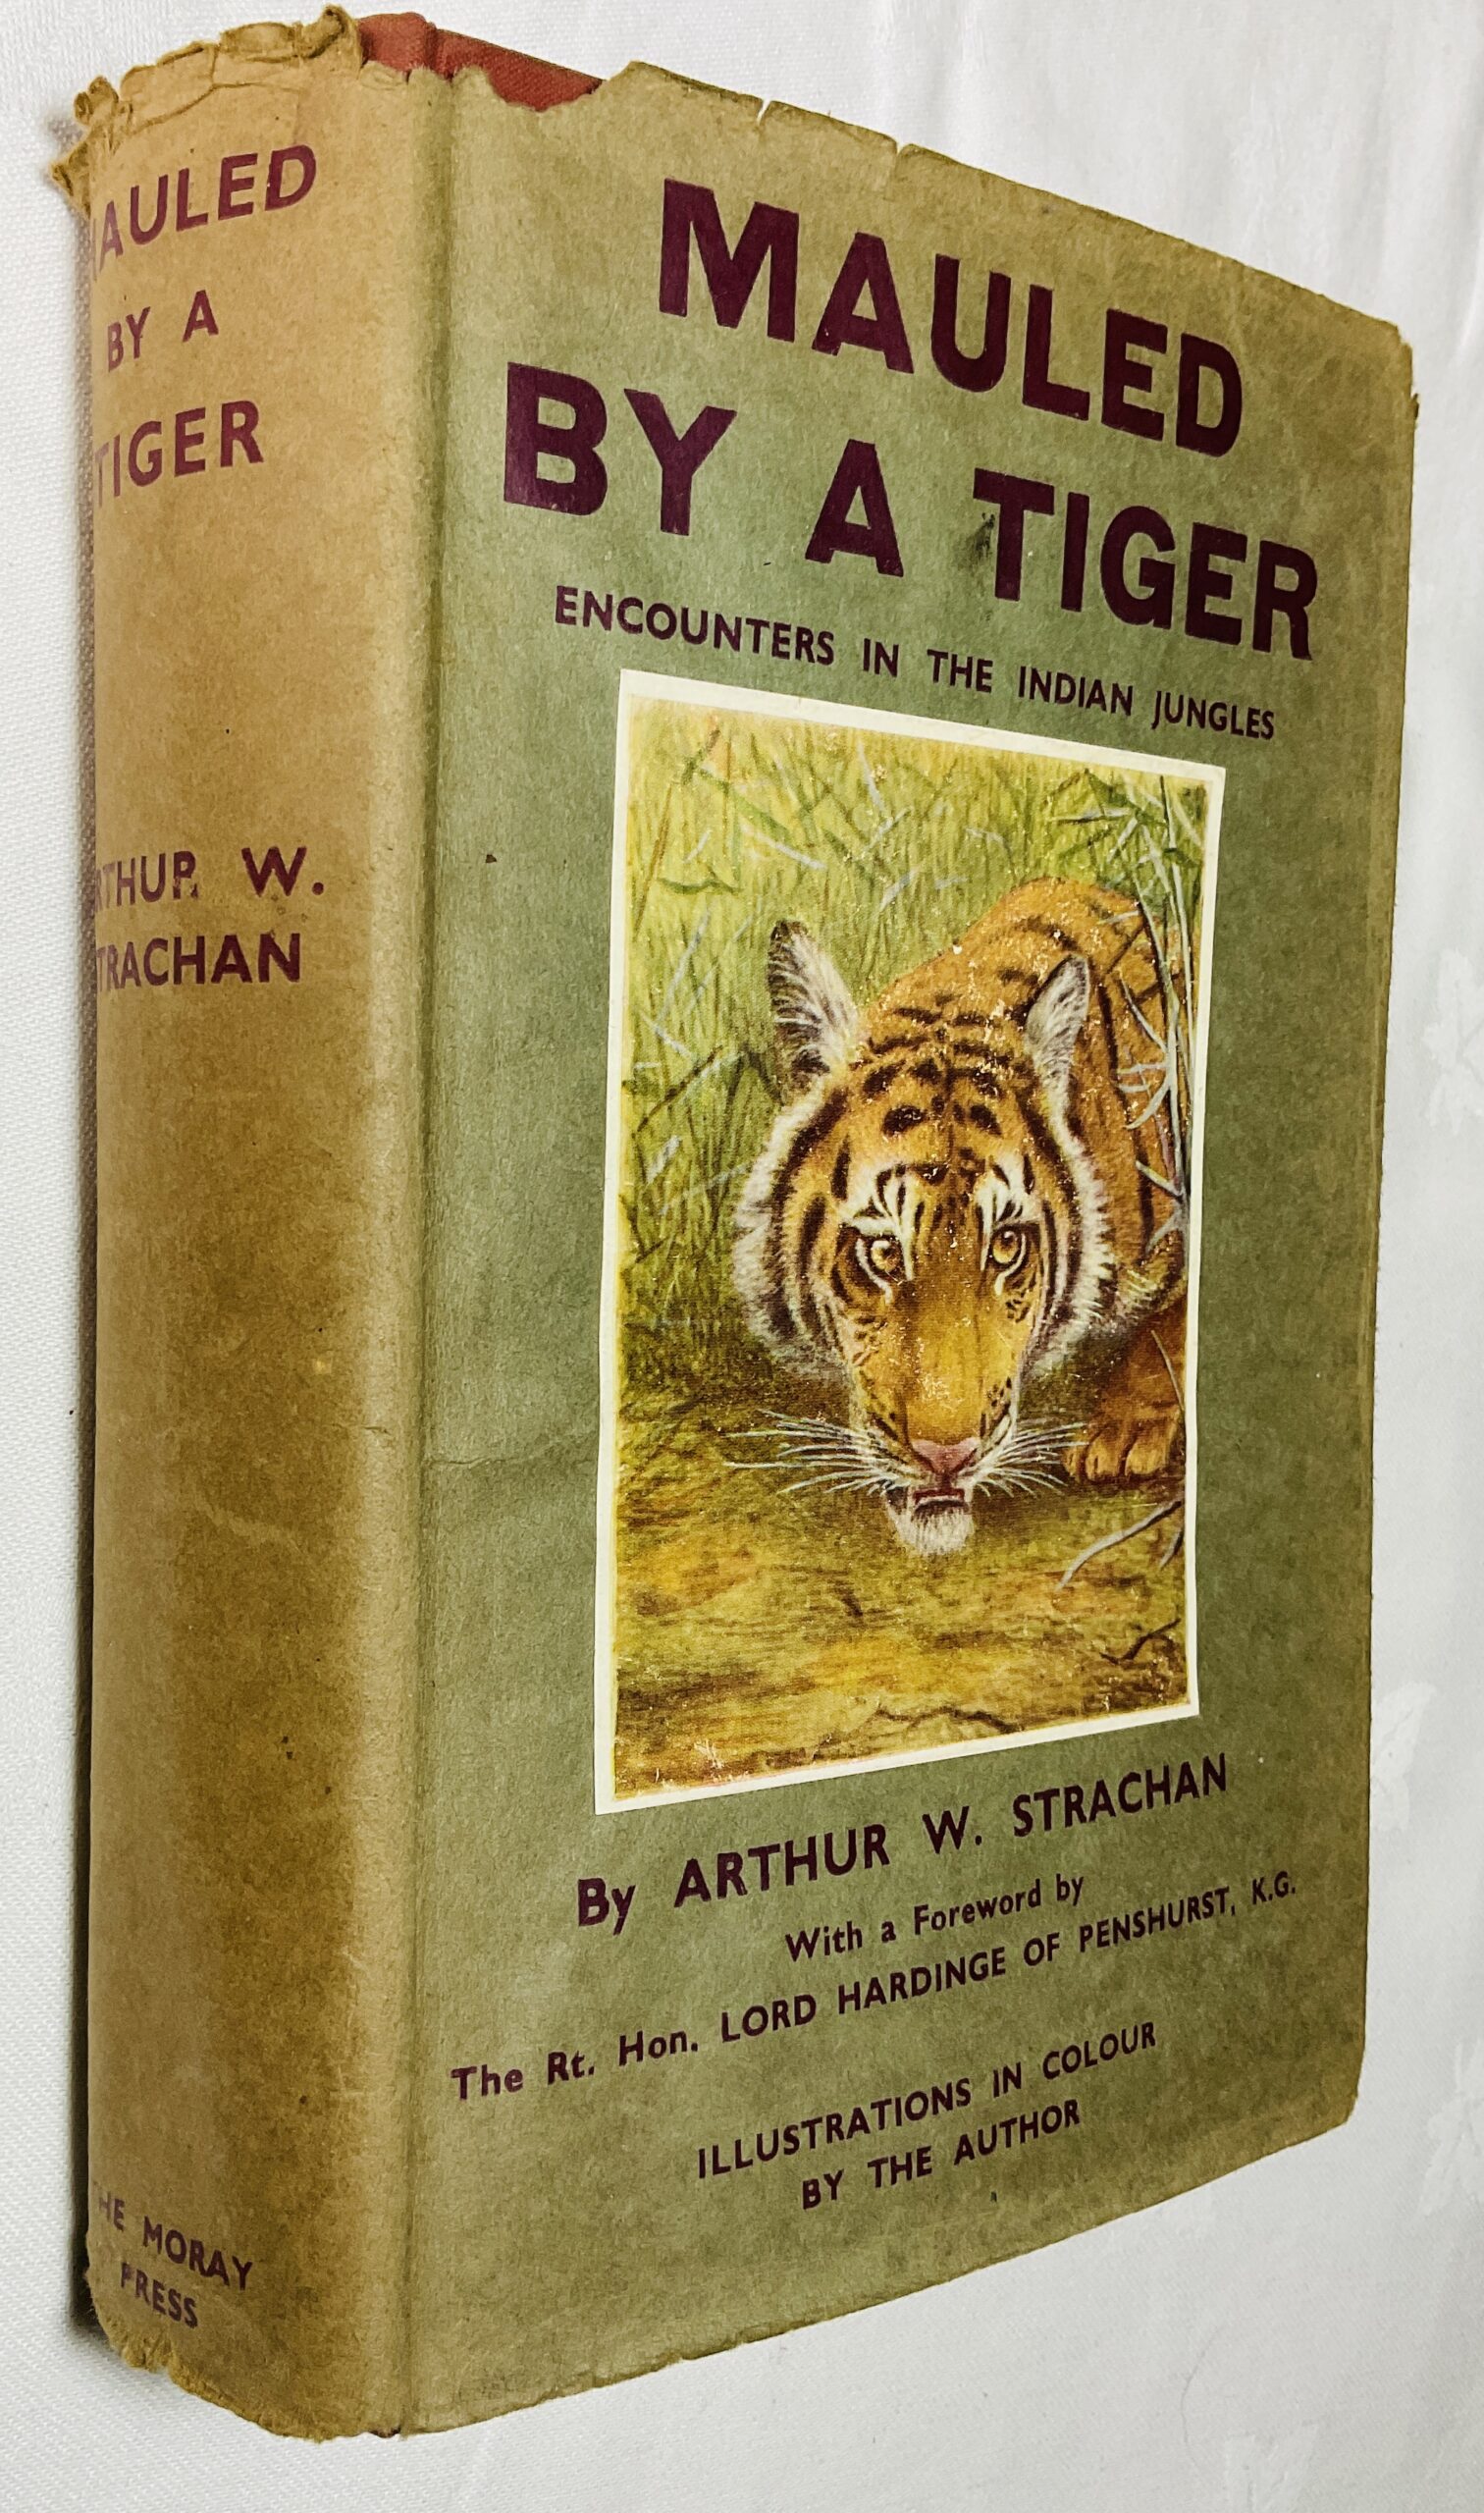 The Tiger Encounter